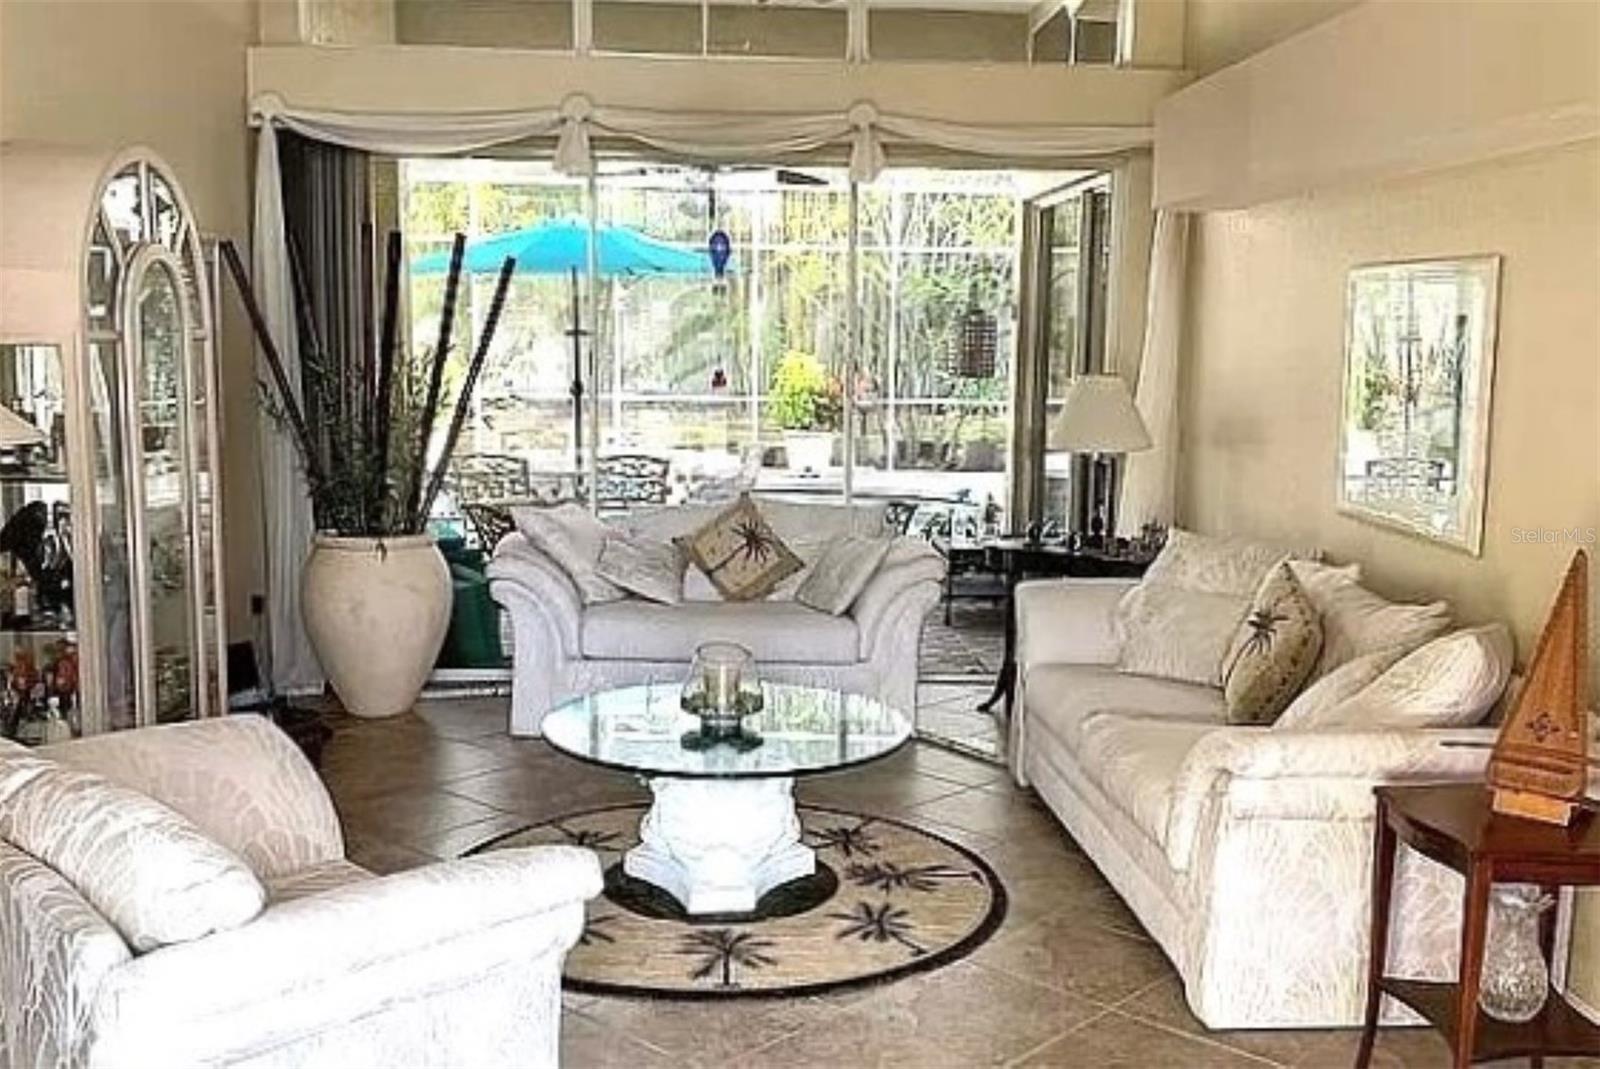 Nice living room with Sliders and pool view